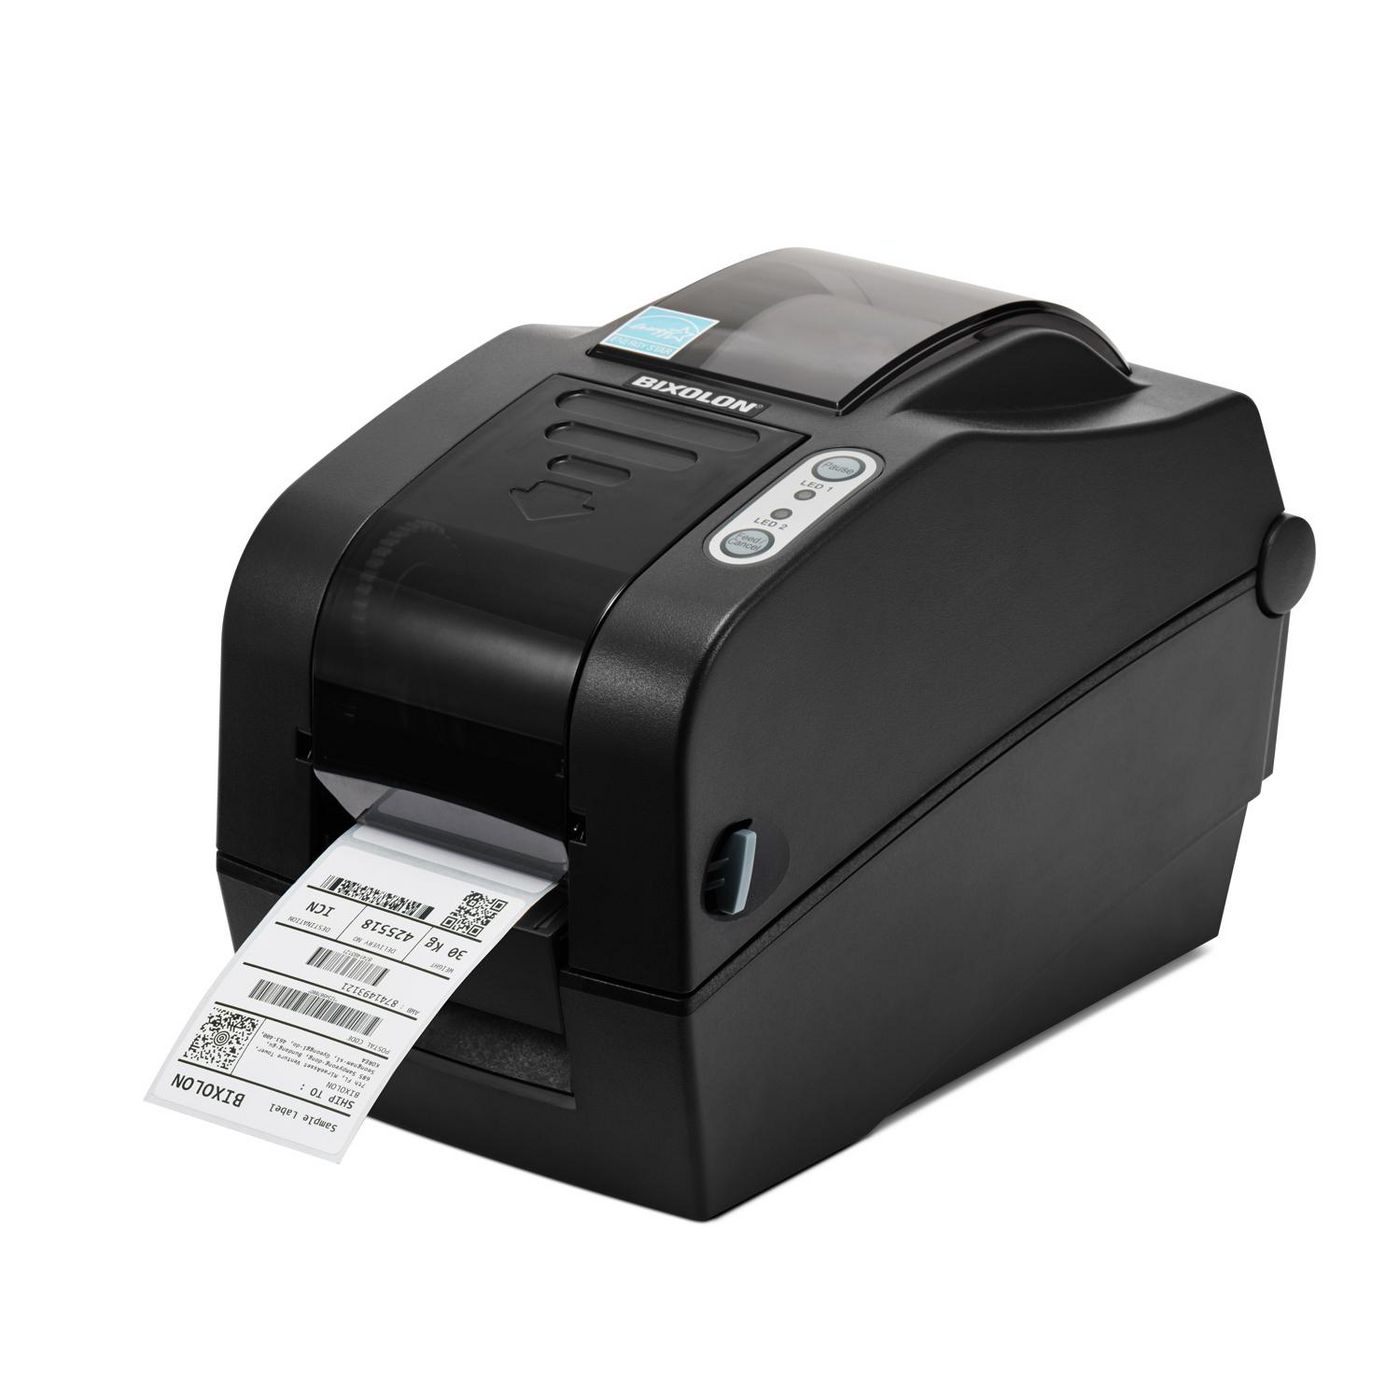 Slp-tx223dg - Label Printer - Direct Thermal - USB / Serial / Parallel